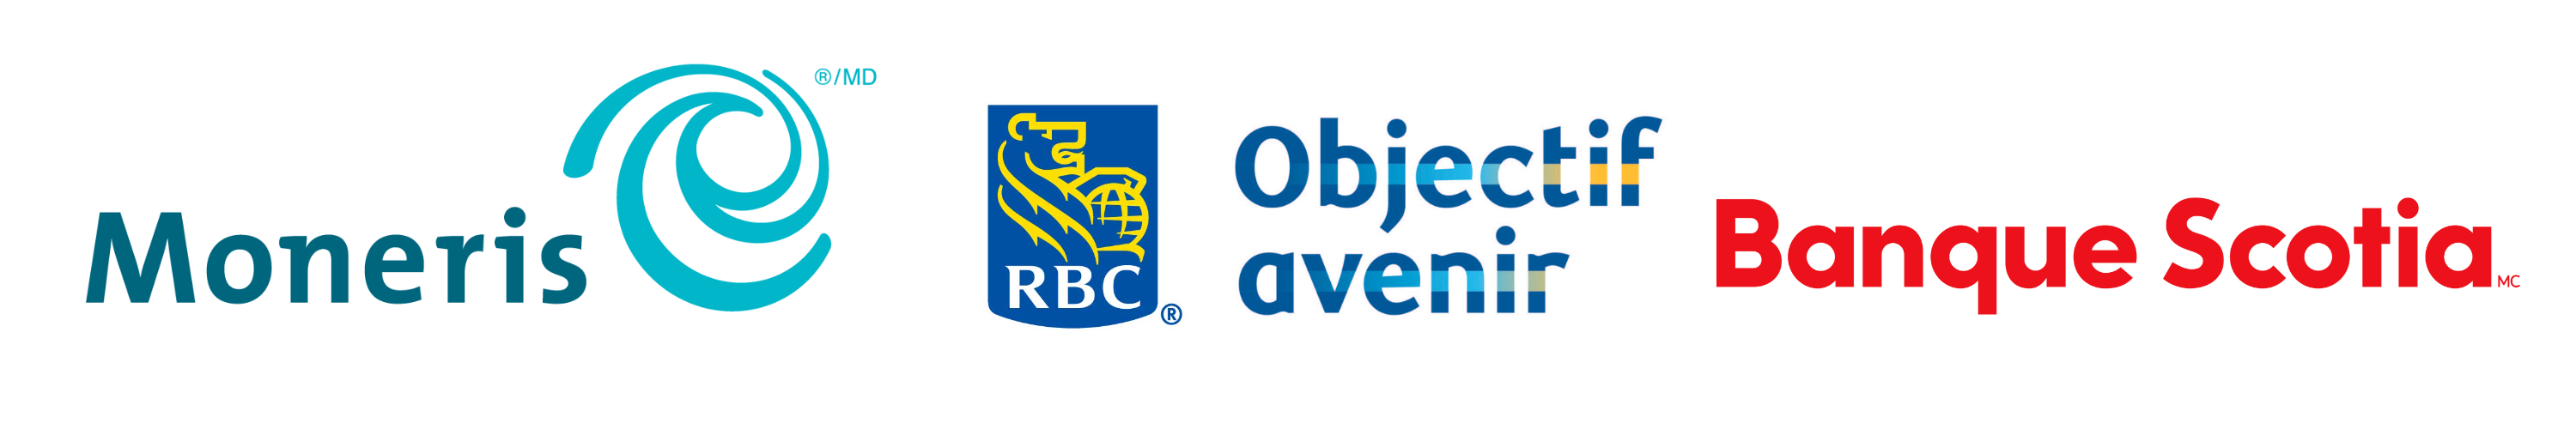 moneris, Objectif avenir RBC, Banque Scotia